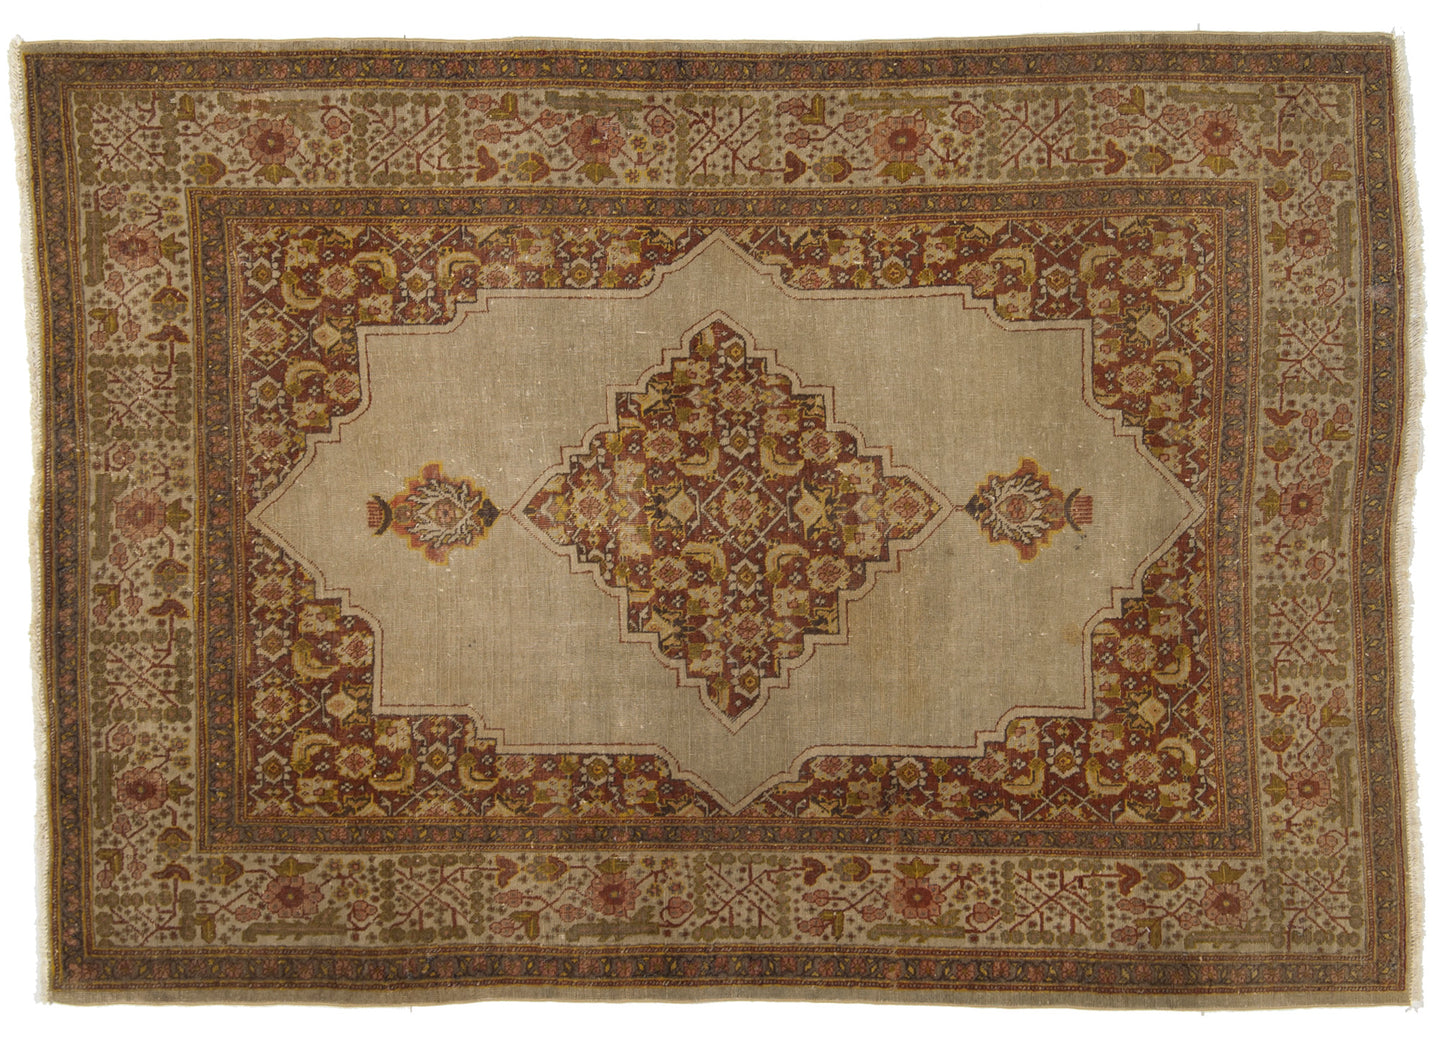 175x120 CM Authentic original hand knotted carpet